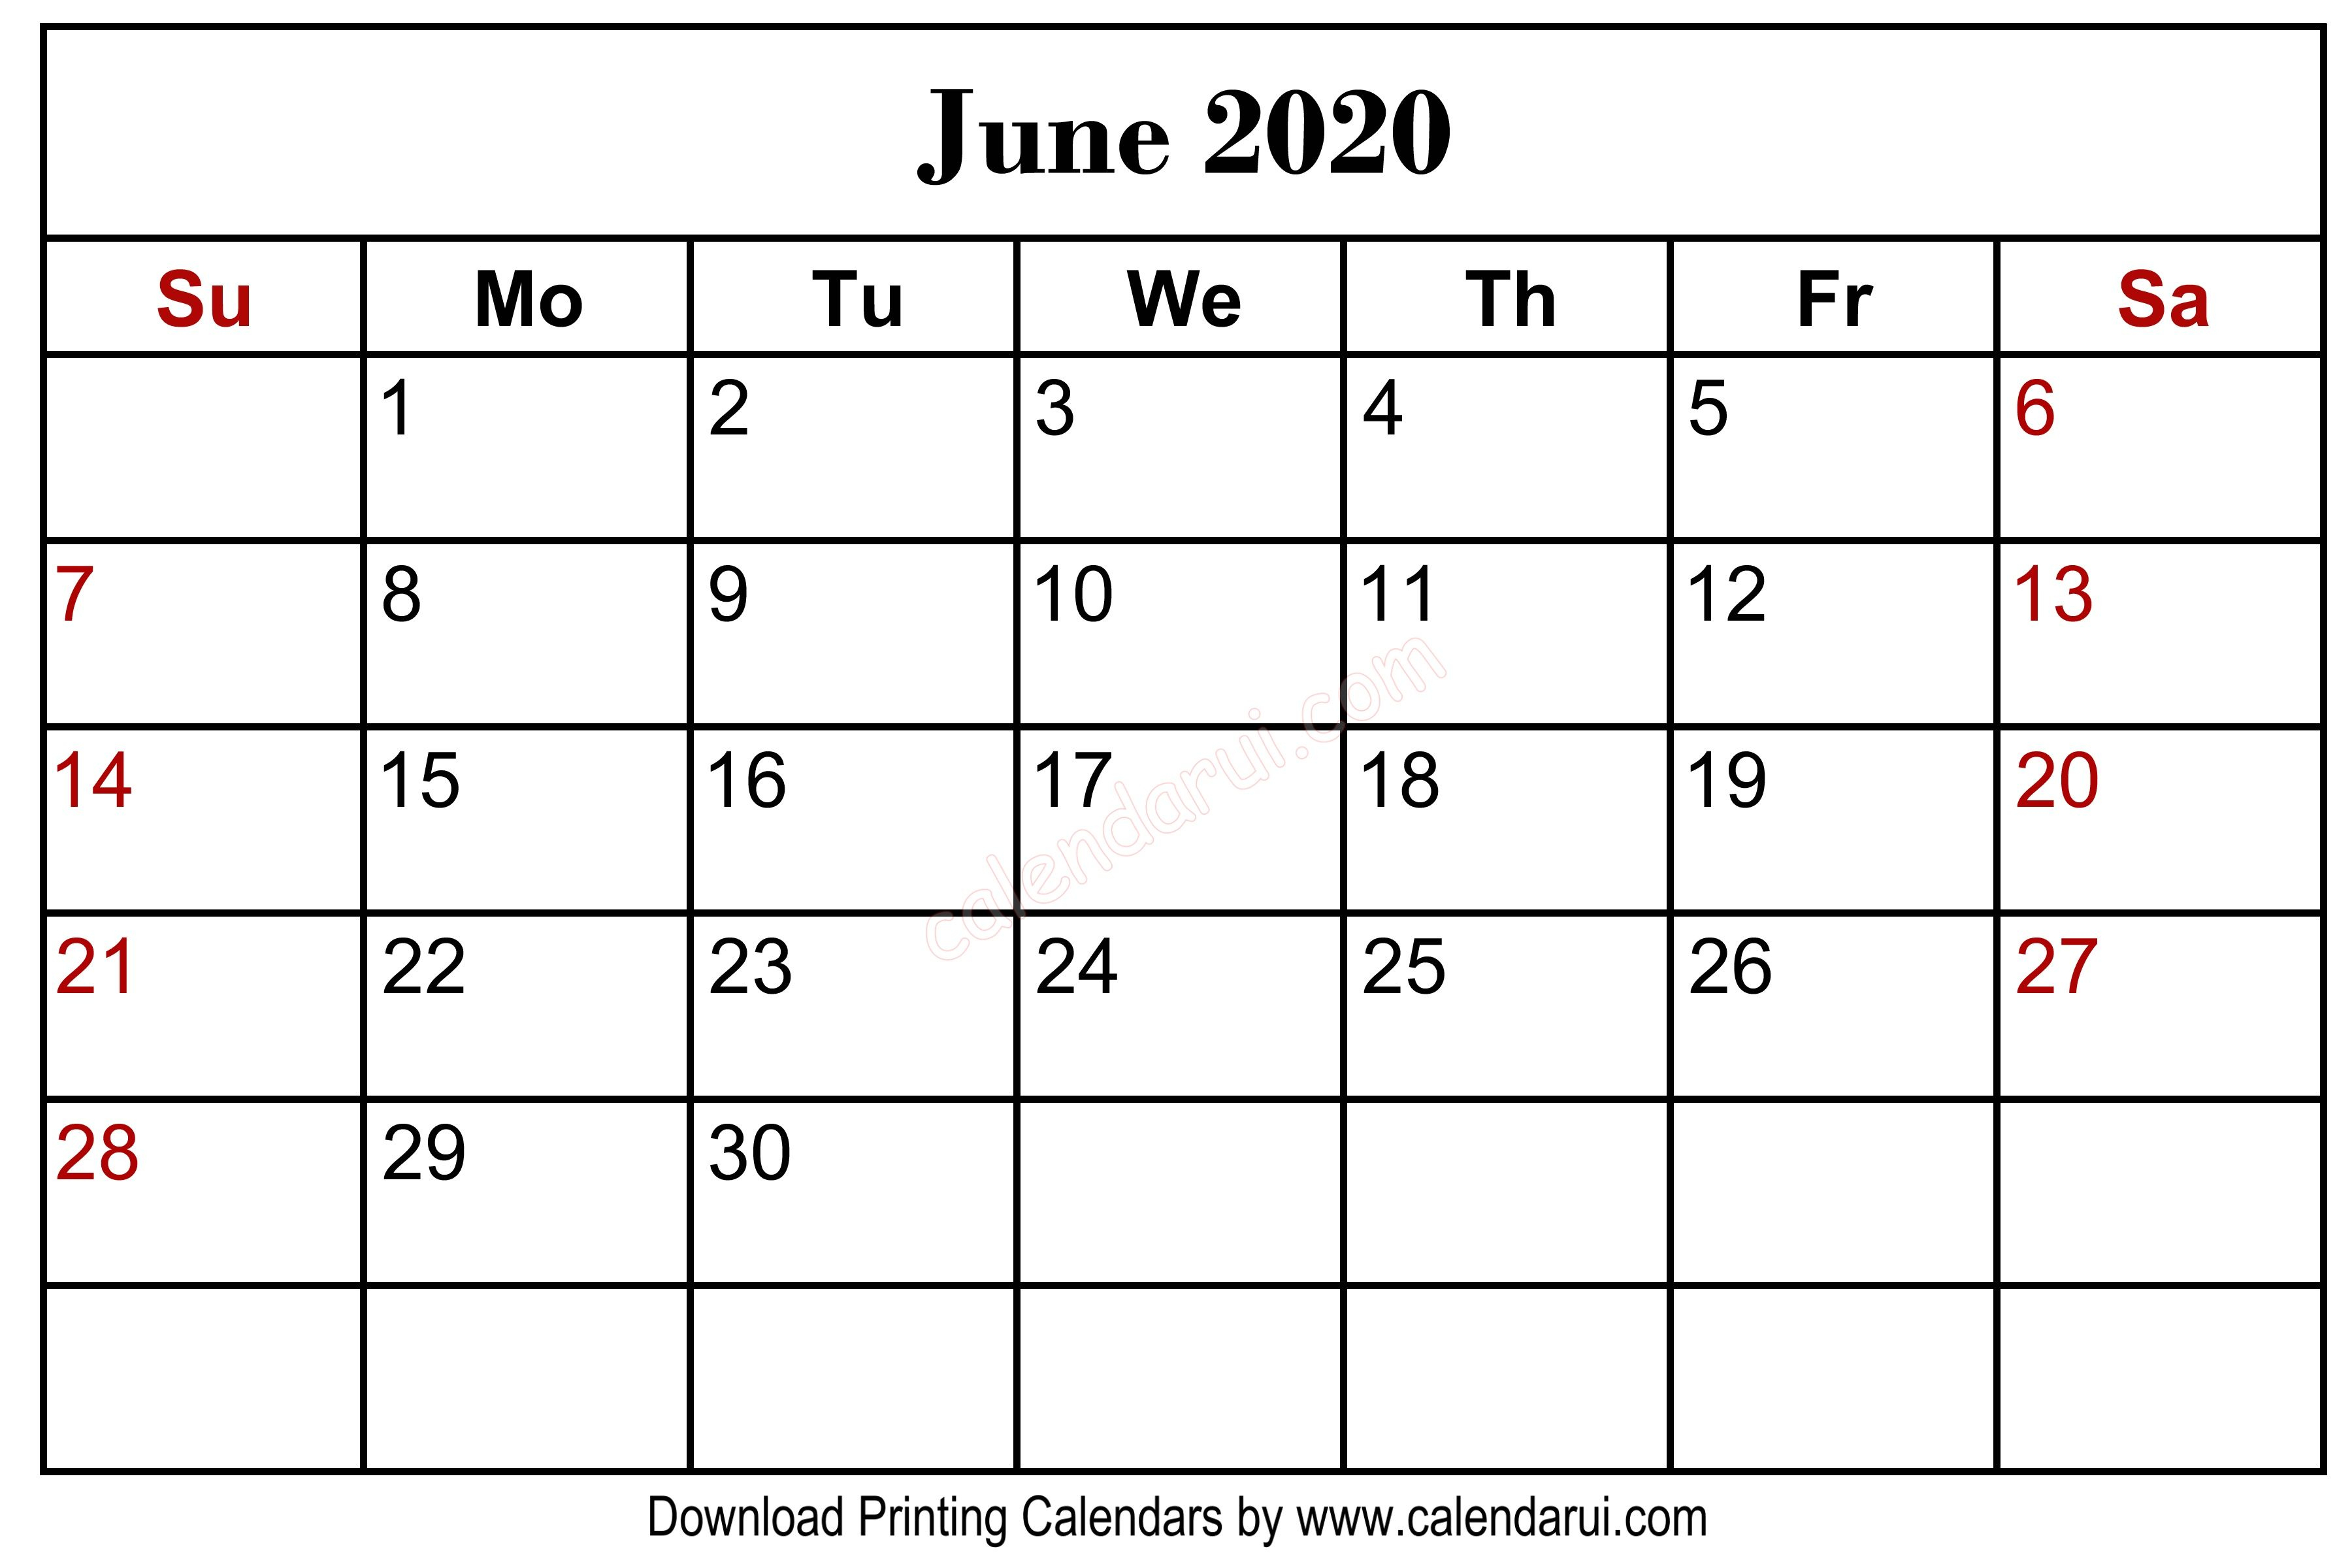 Homepage / 2020 Calendar / June 2020 Blank Calendar